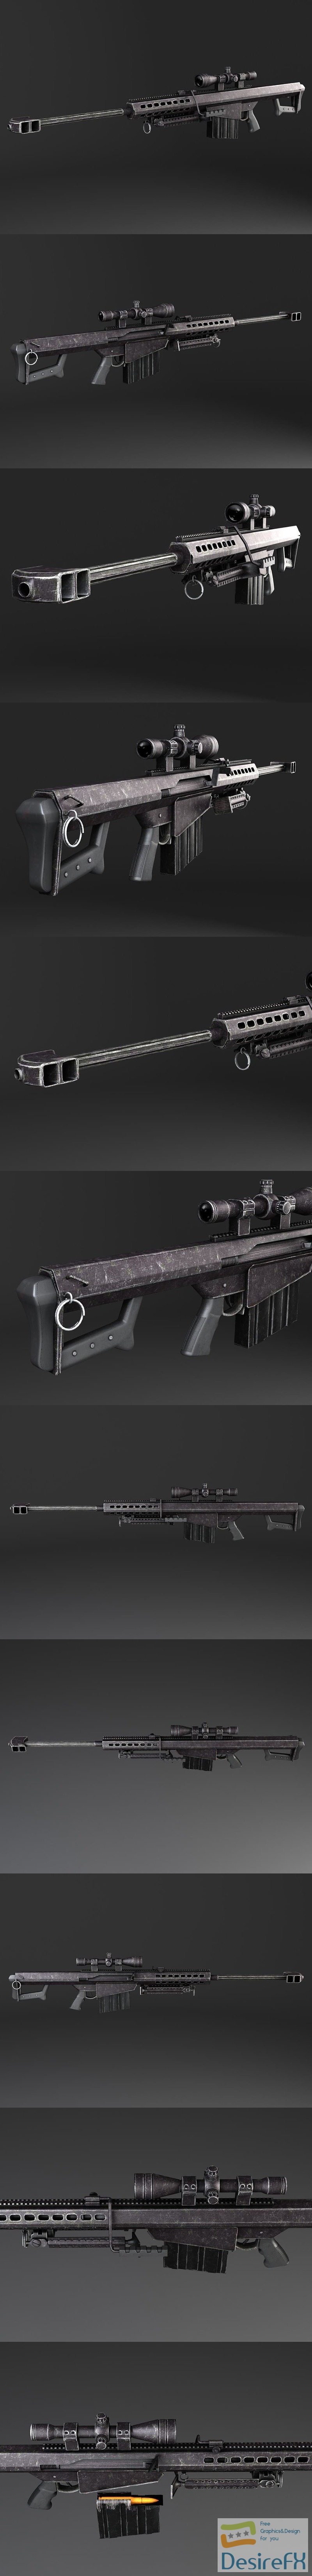 Barrett M82A1 Sniper Rifle 3D Model